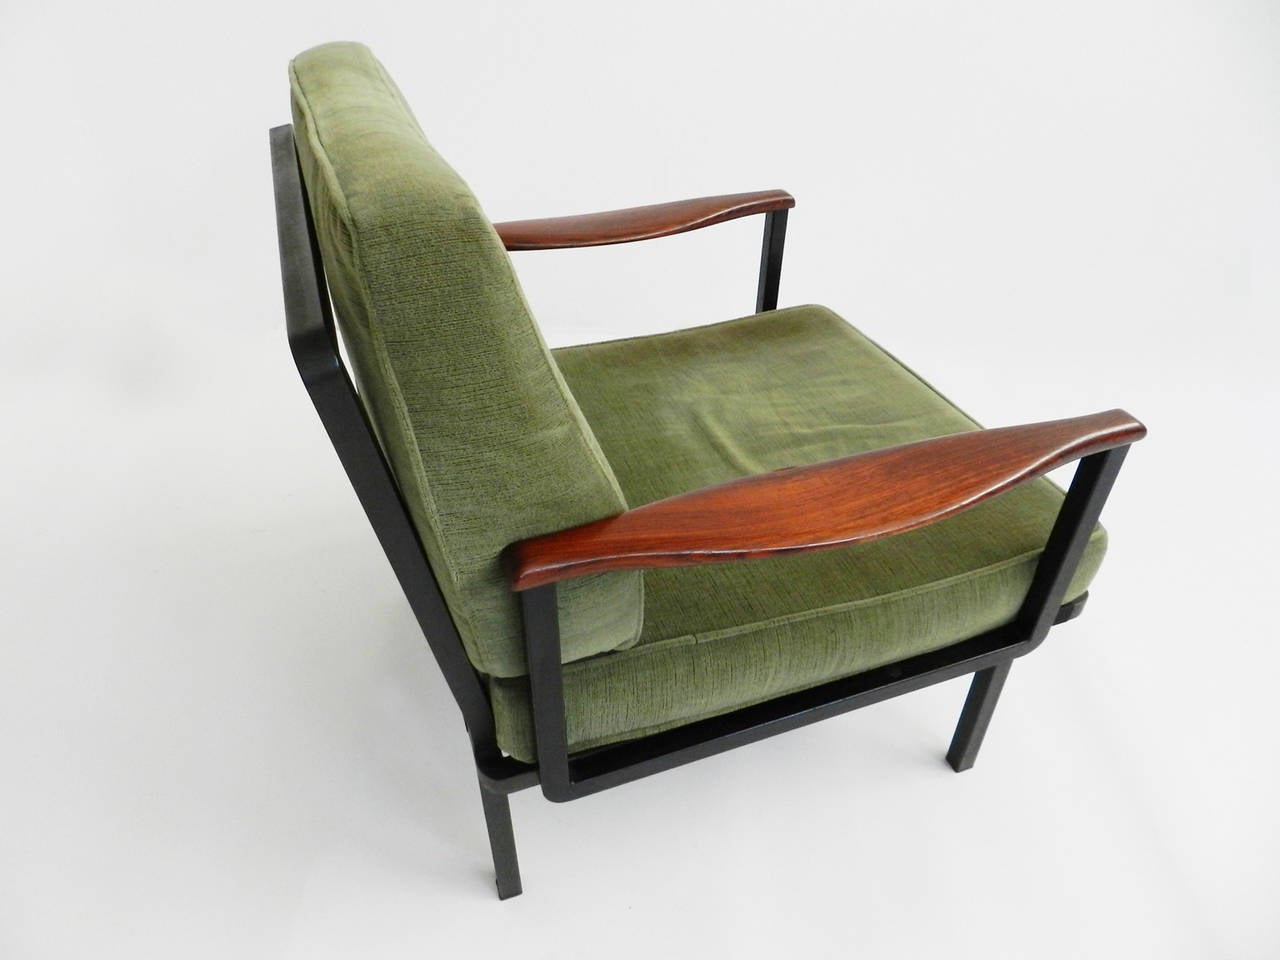 Original lounge chair produced by Tecno, 1961 and designed by Osvaldo Borsani.

Literature:
Giuliana Gramigna,Biondi,